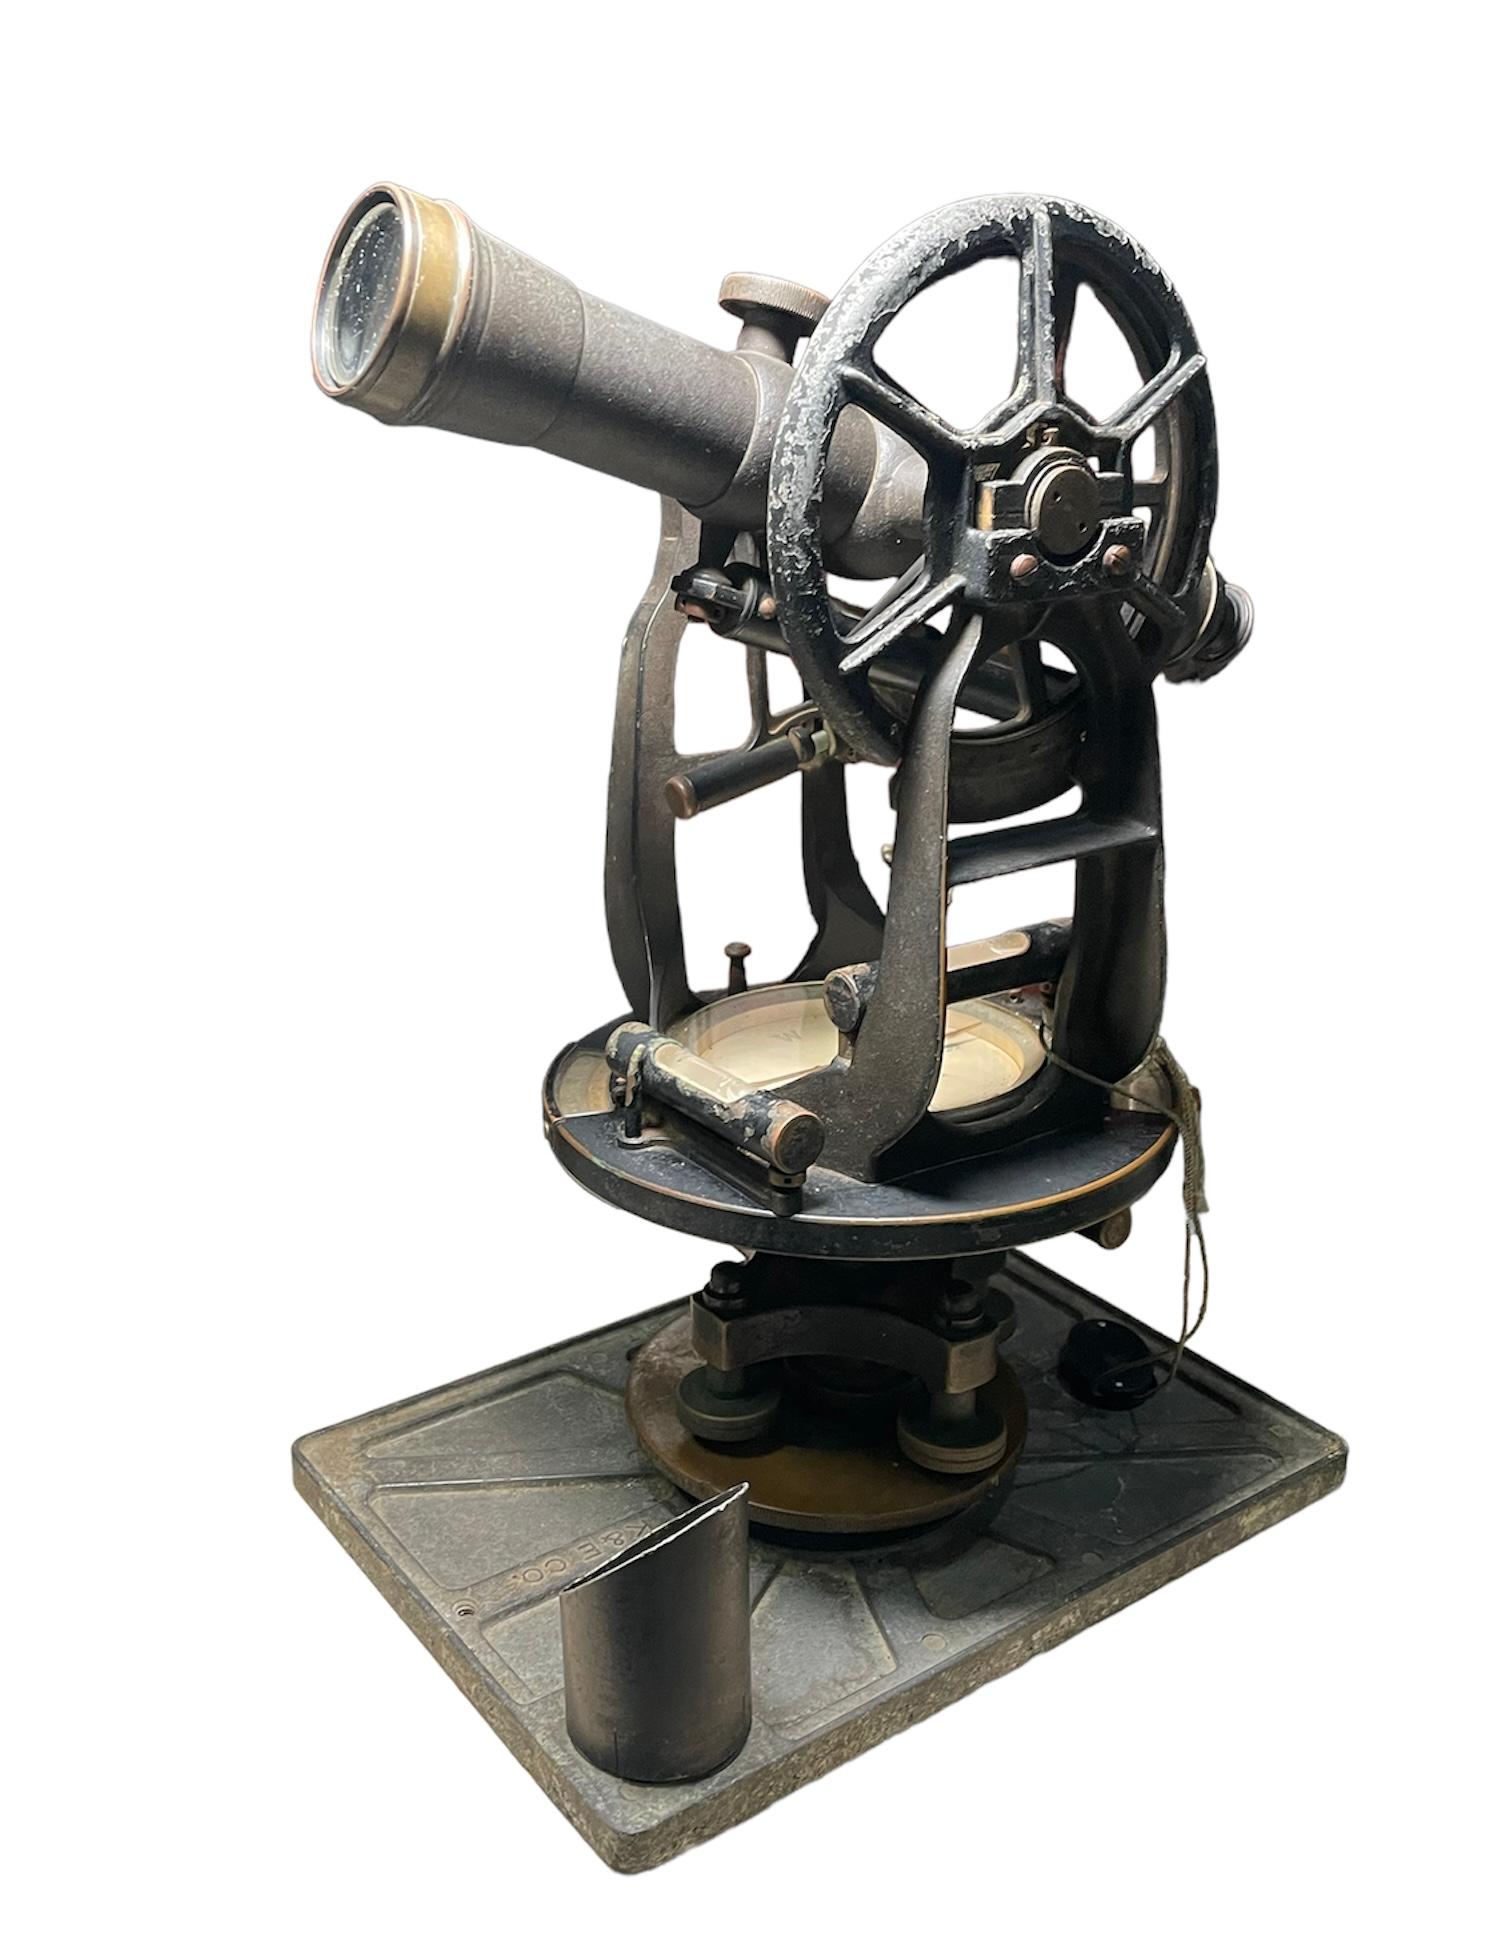 Machine-Made Keuffel & Esser Co. Military Transit Surveyor Telescope For Sale